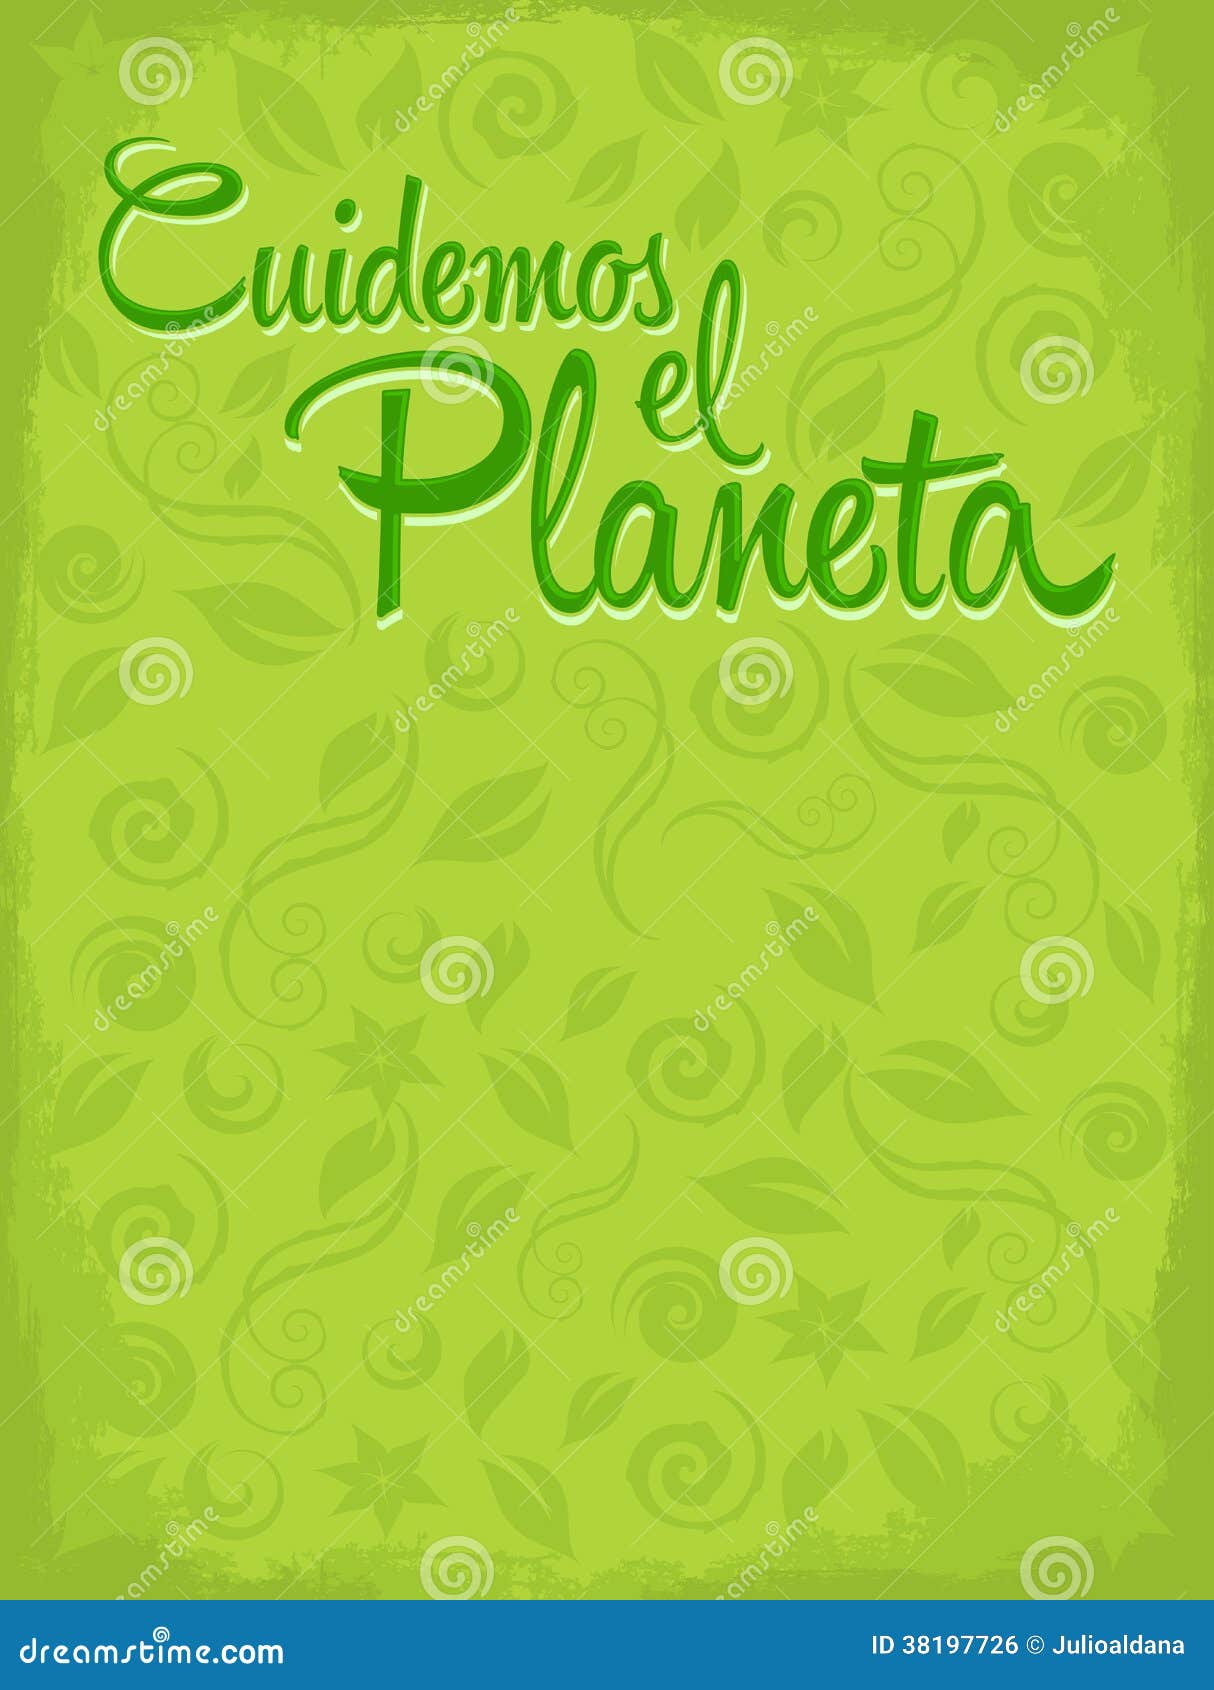 cuidemos el planeta - care for the planet spanish